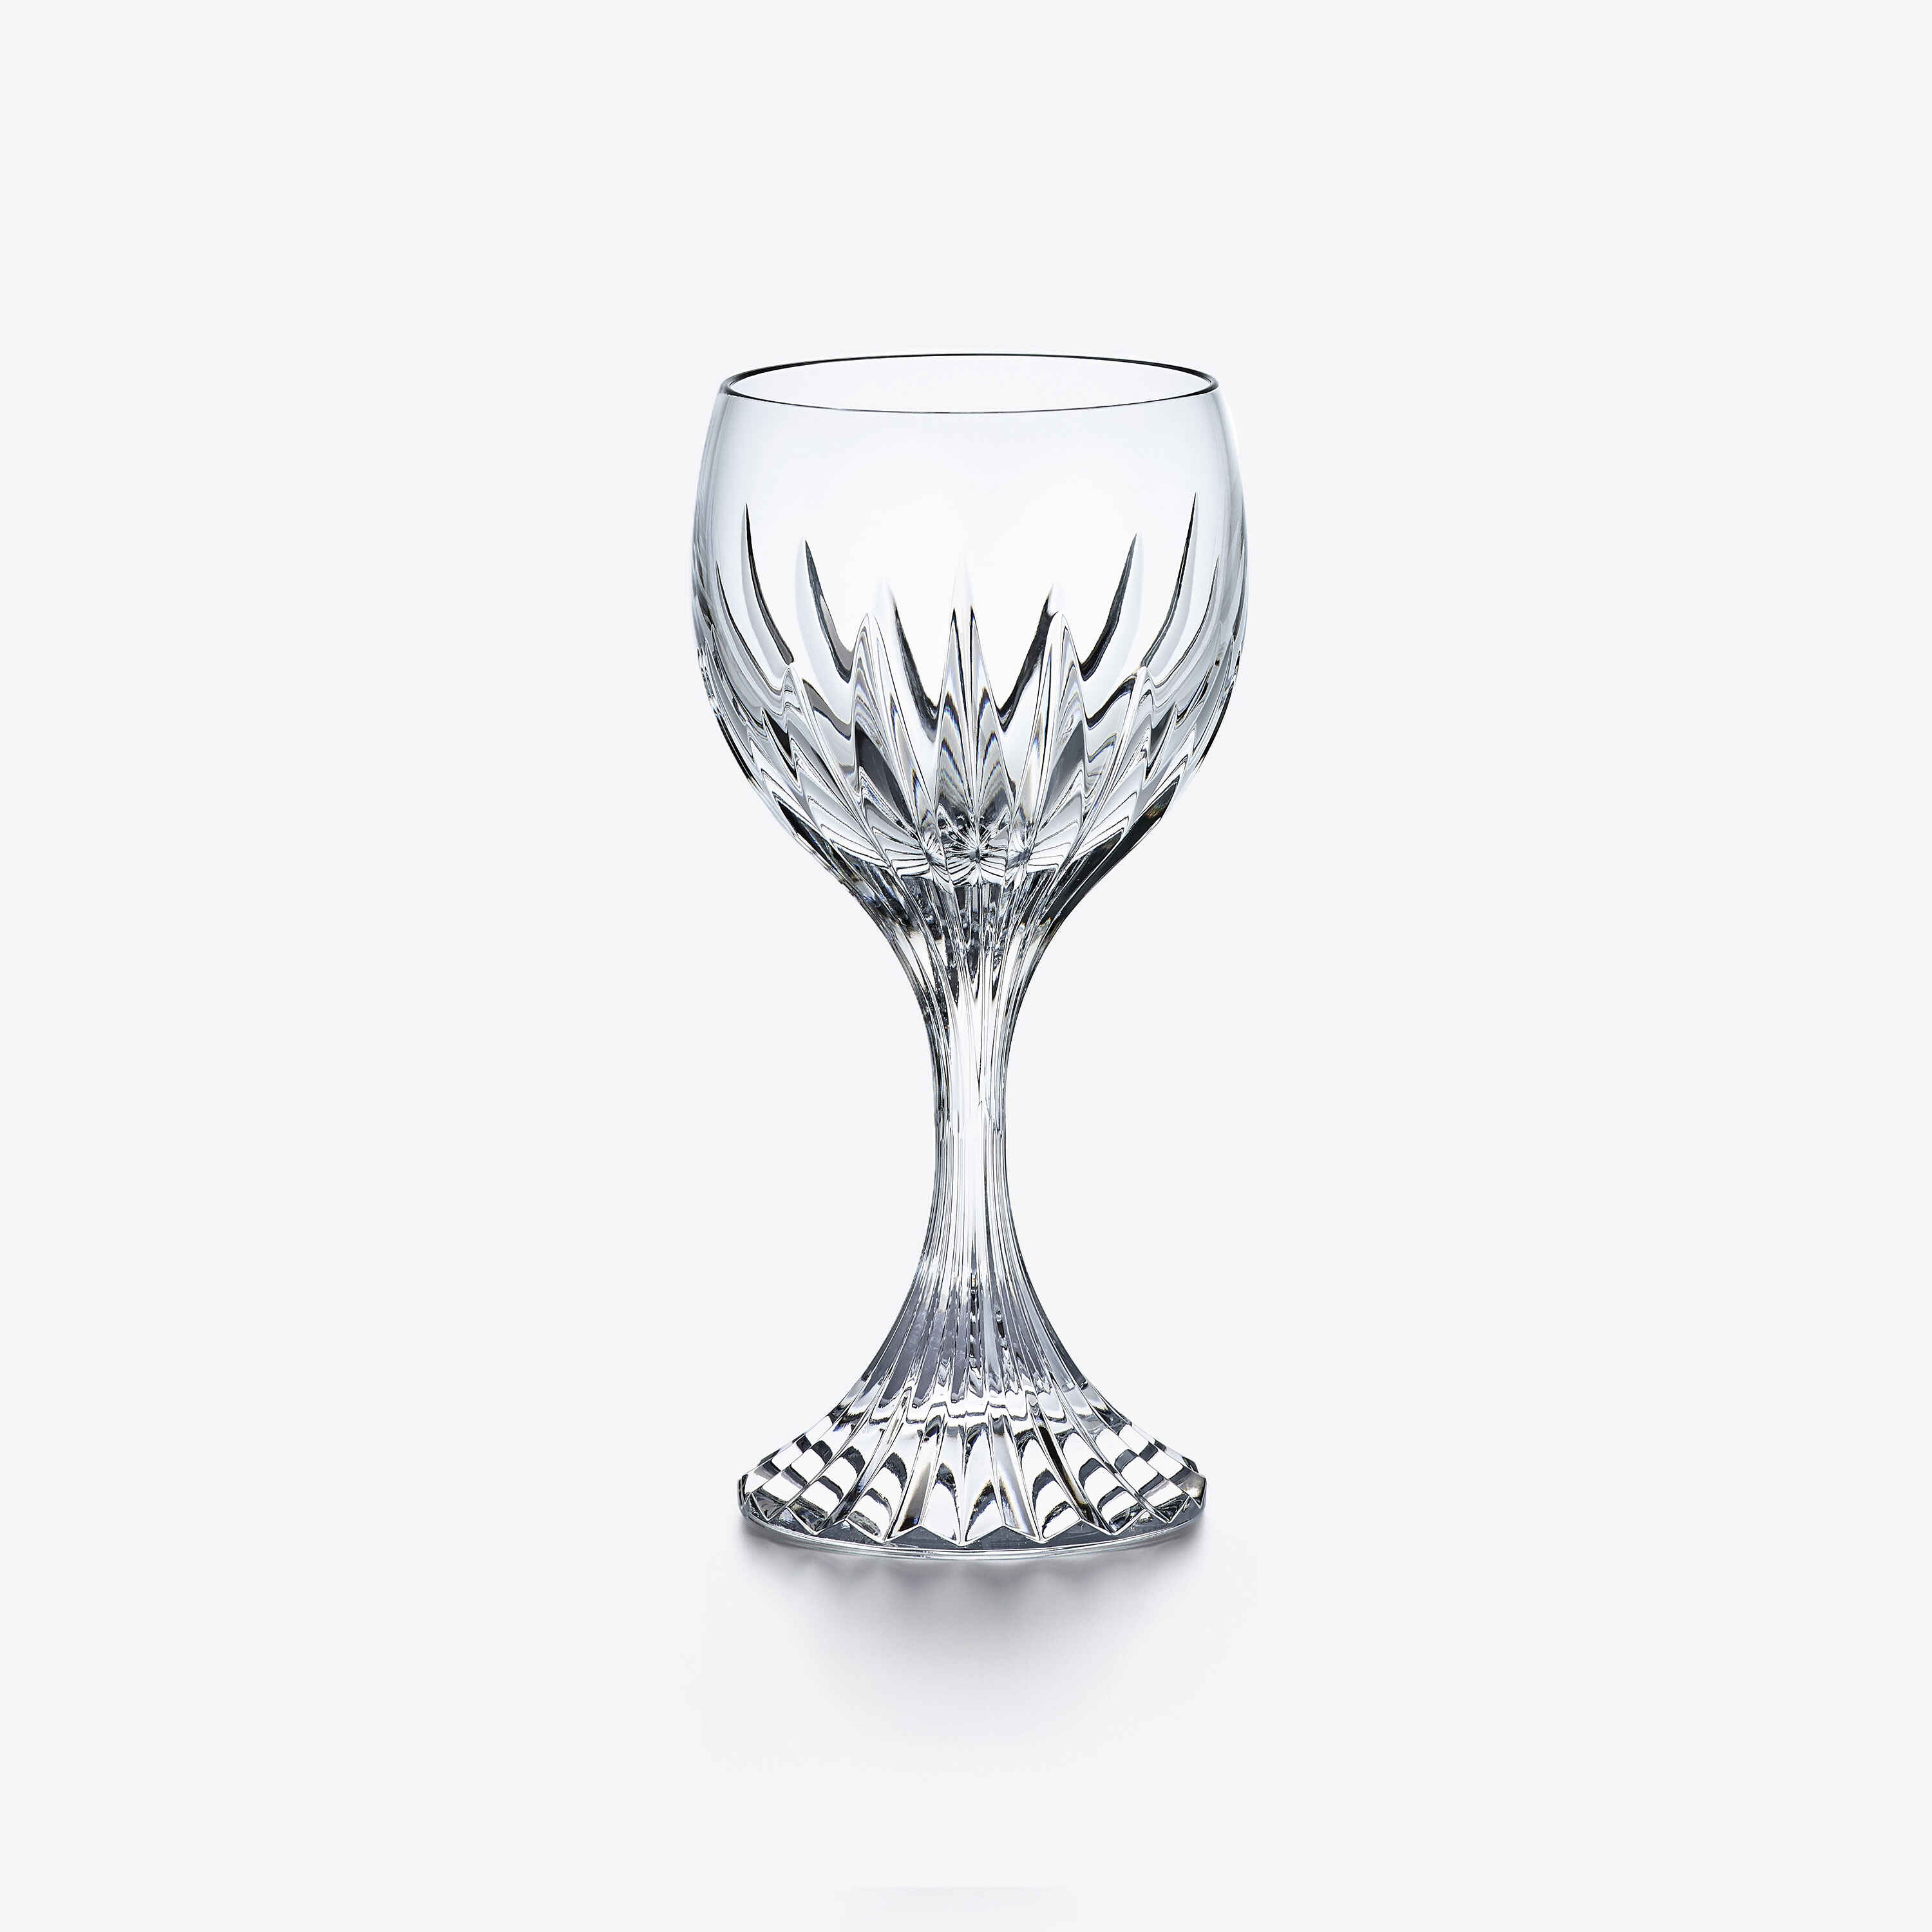 Elle Decor Embossed Goblets Glasses, Vintage Glassware Sets, Water Goblets  for Party, Wedding, & Daily Use, Set of 6, Blue